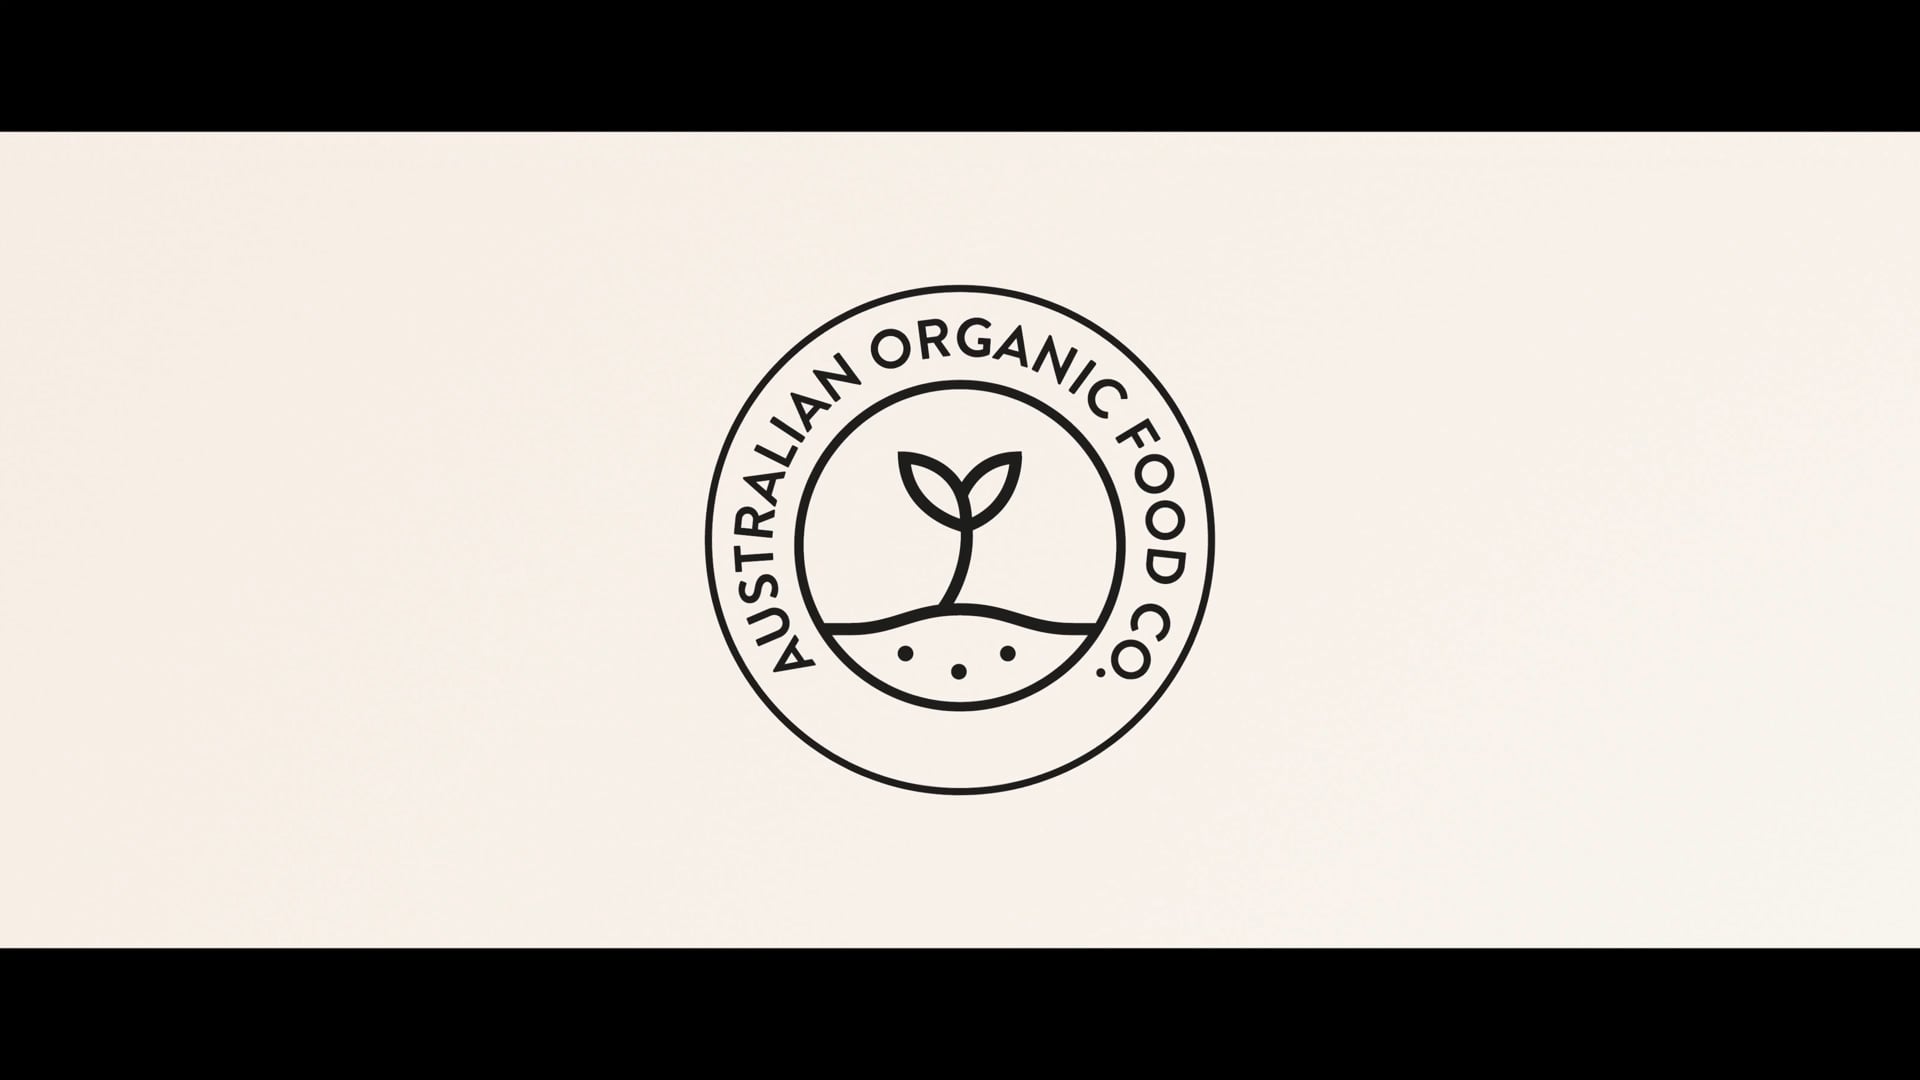 Australian Organic Food Company - 2 Minute